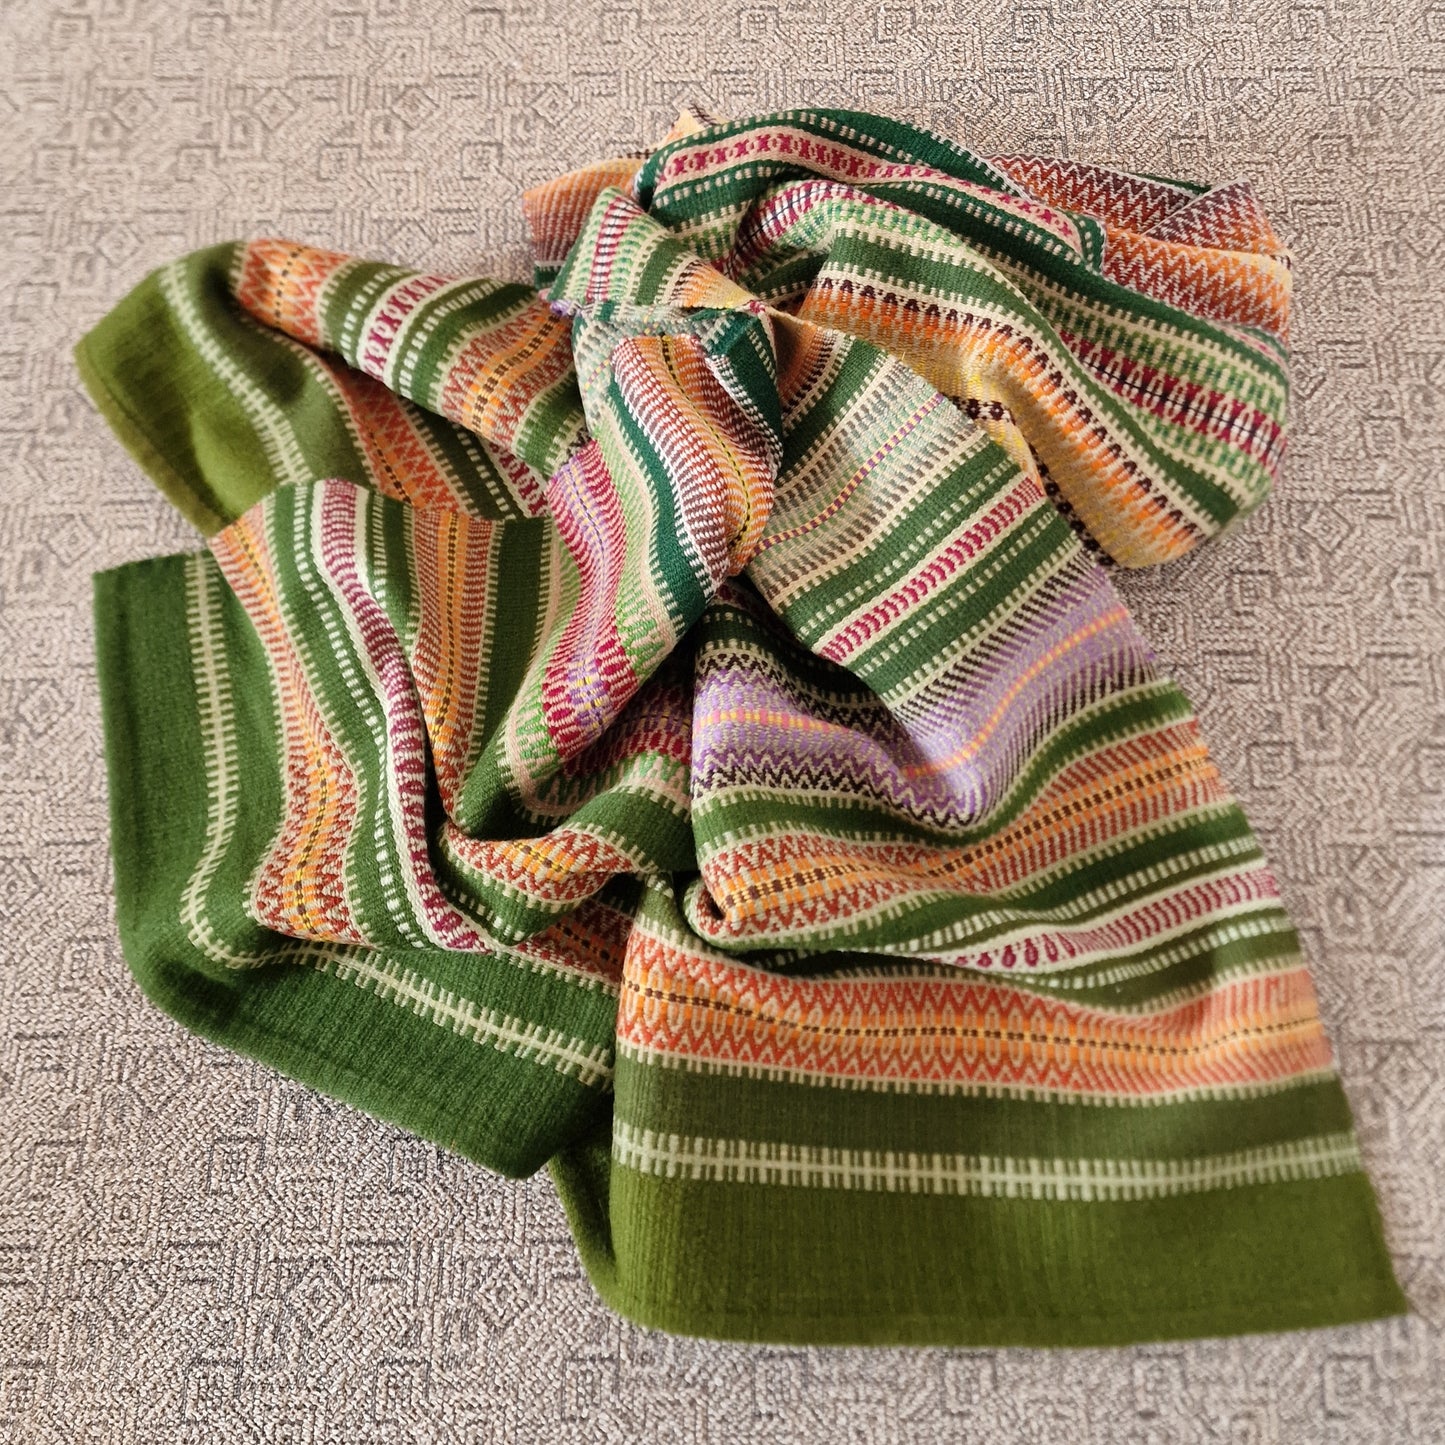 Woven wool blanket / bedspread in warm tones (DZTO 27)